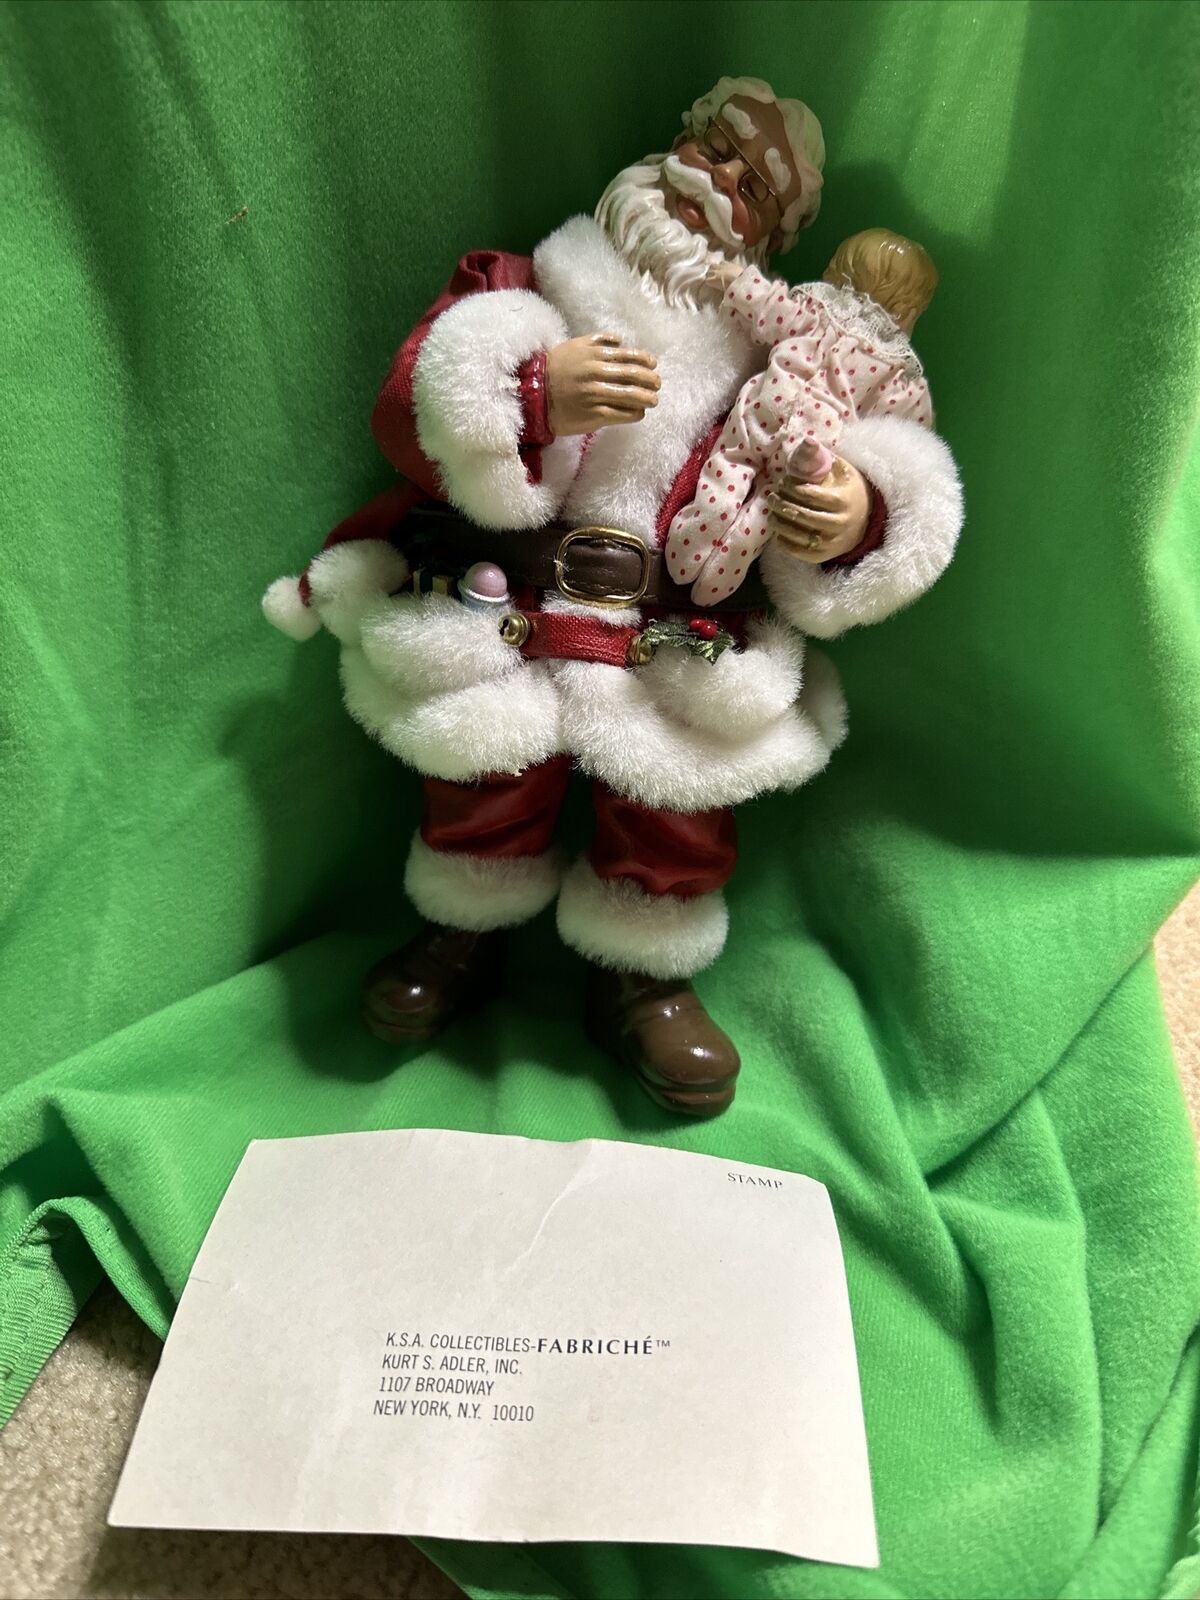 Fabriche KSA Collectibles Santa Holding Baby “Baby Burping Santa” Kurt Adler VTG